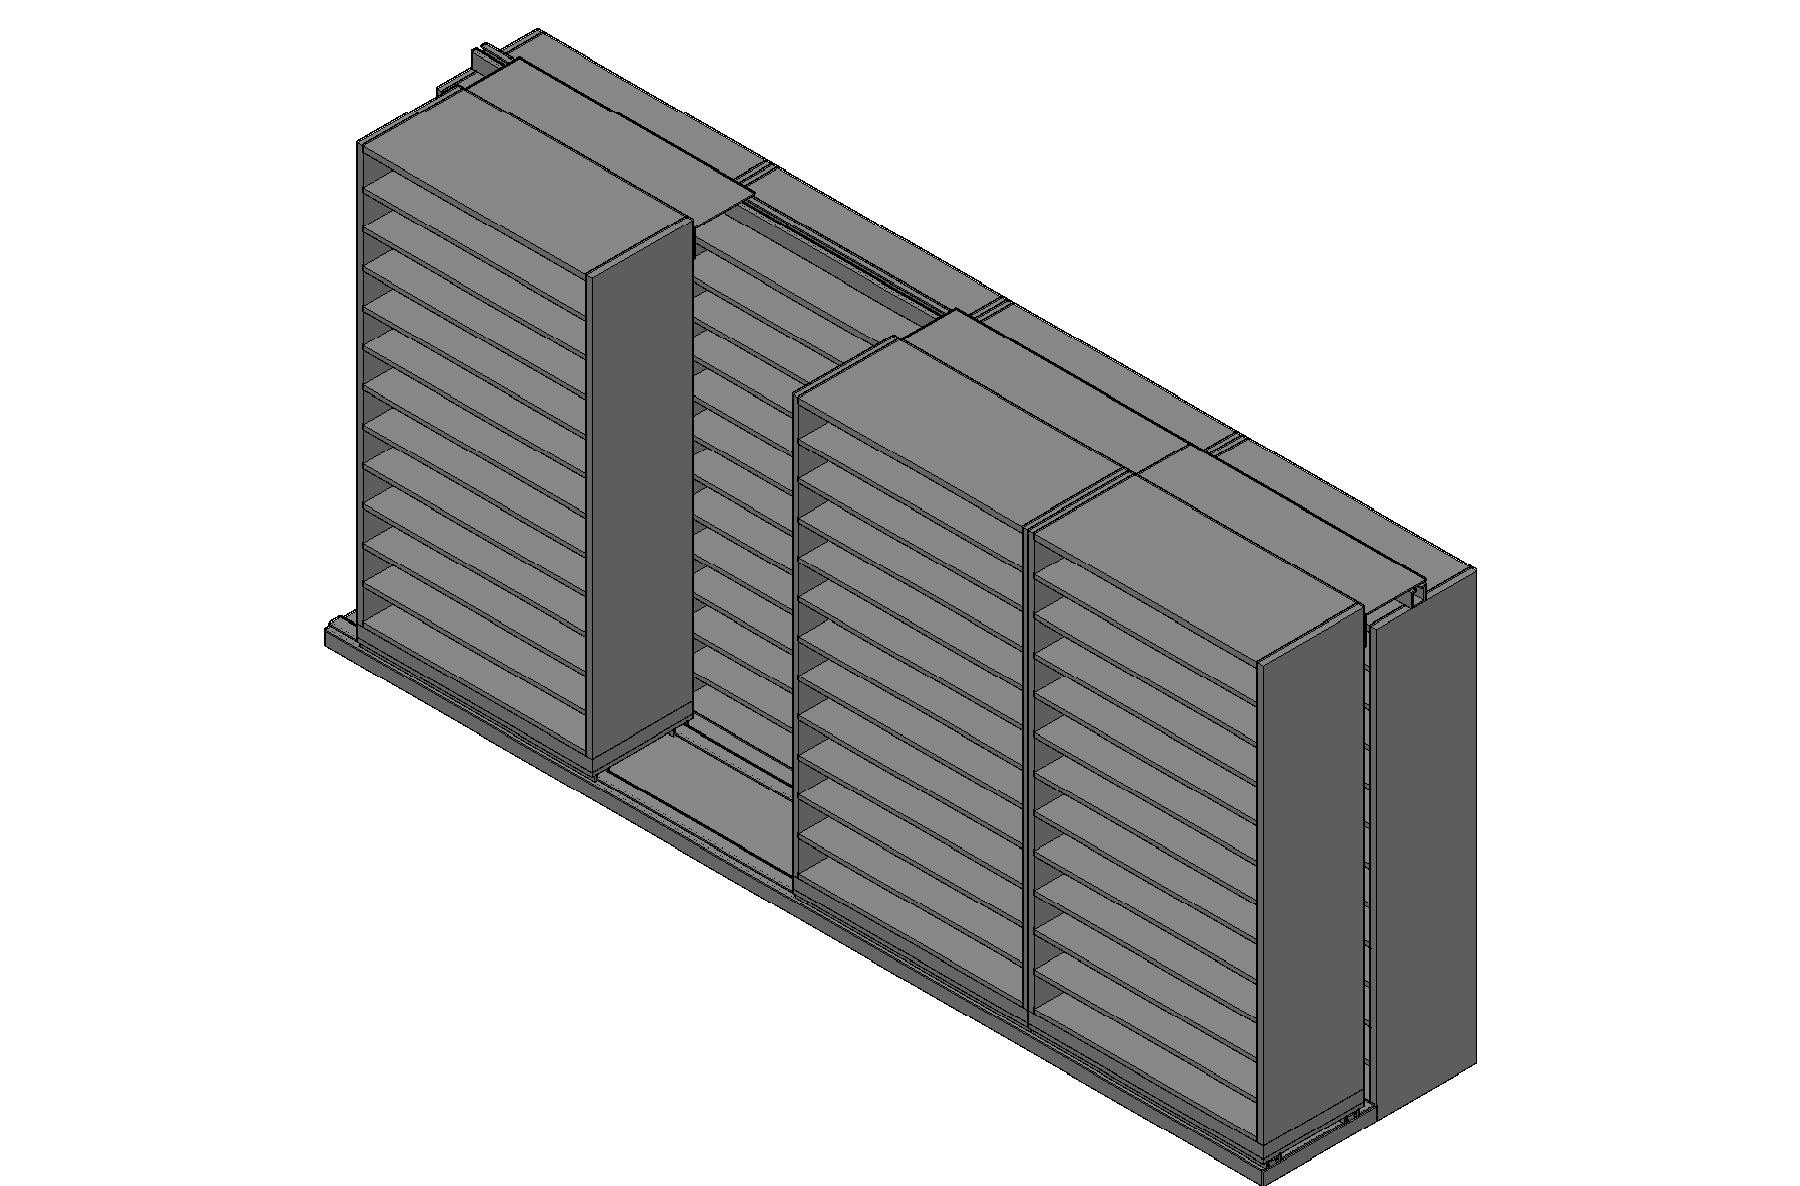 Bin Size Sliding Shelves - 2 Rows Deep - 12 Levels - (42" x 18" Shelves) - 172" Total Width